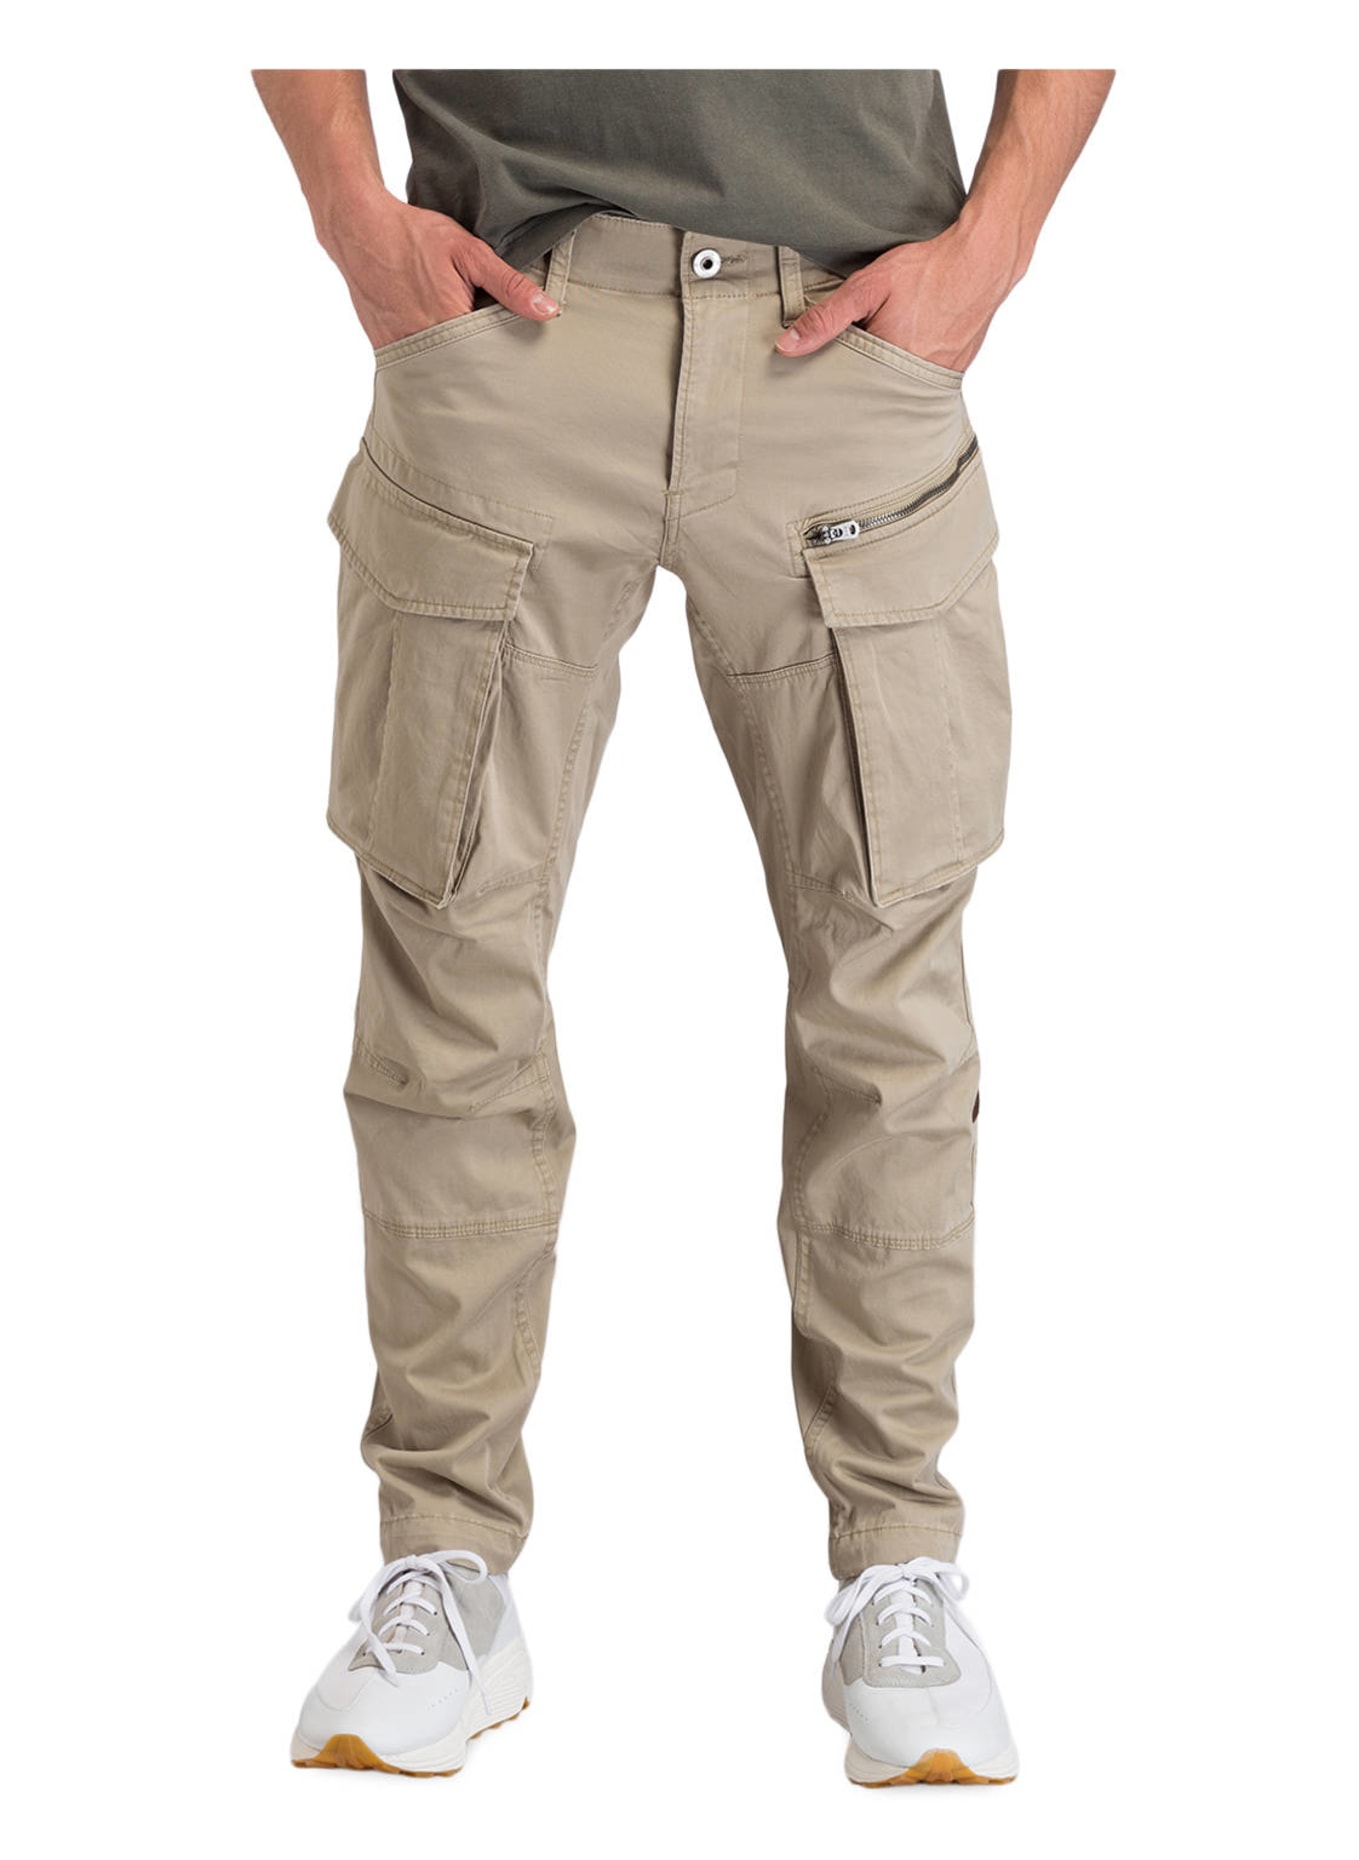 G-Star Raw Men's Zip Pocket 3D Skinny Fit Cargo Pants, Dark Black, 28W x  30L at Amazon Men's Clothing store